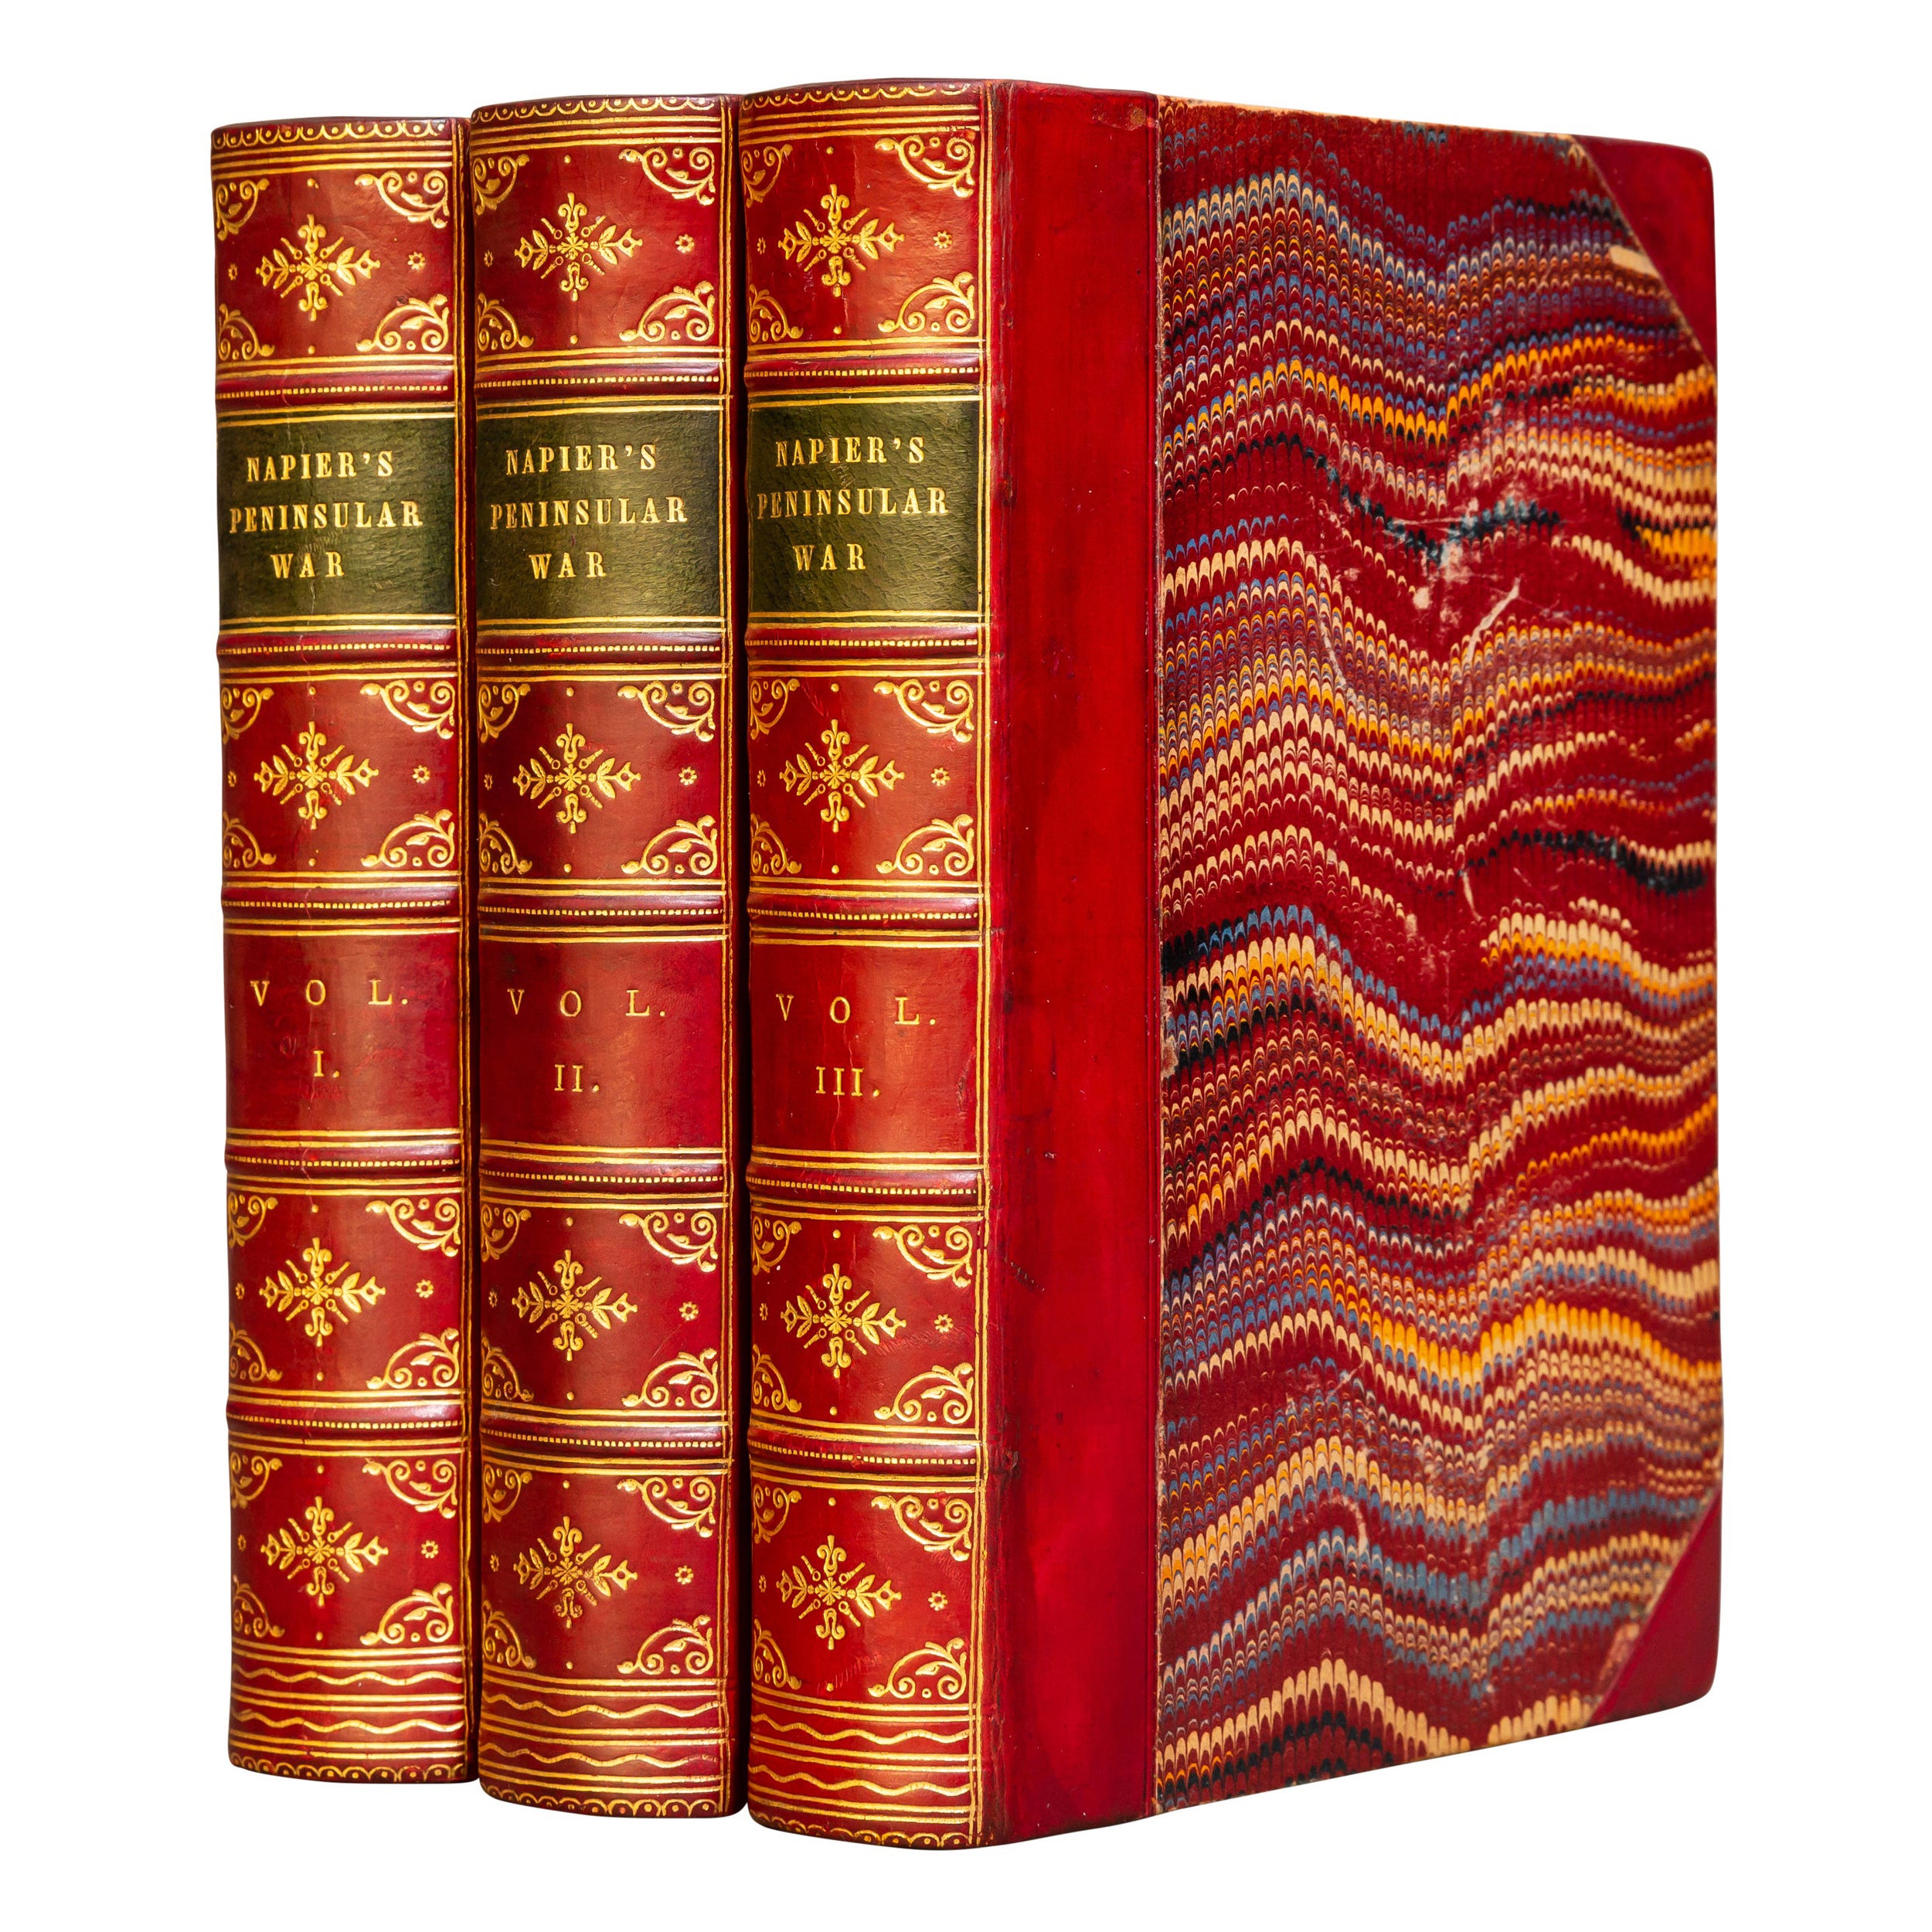 « Book Sets » 3 Volumes. W. F. P. Napier, History of the Peninsular War (Histoire de la guerre péninsulaire)